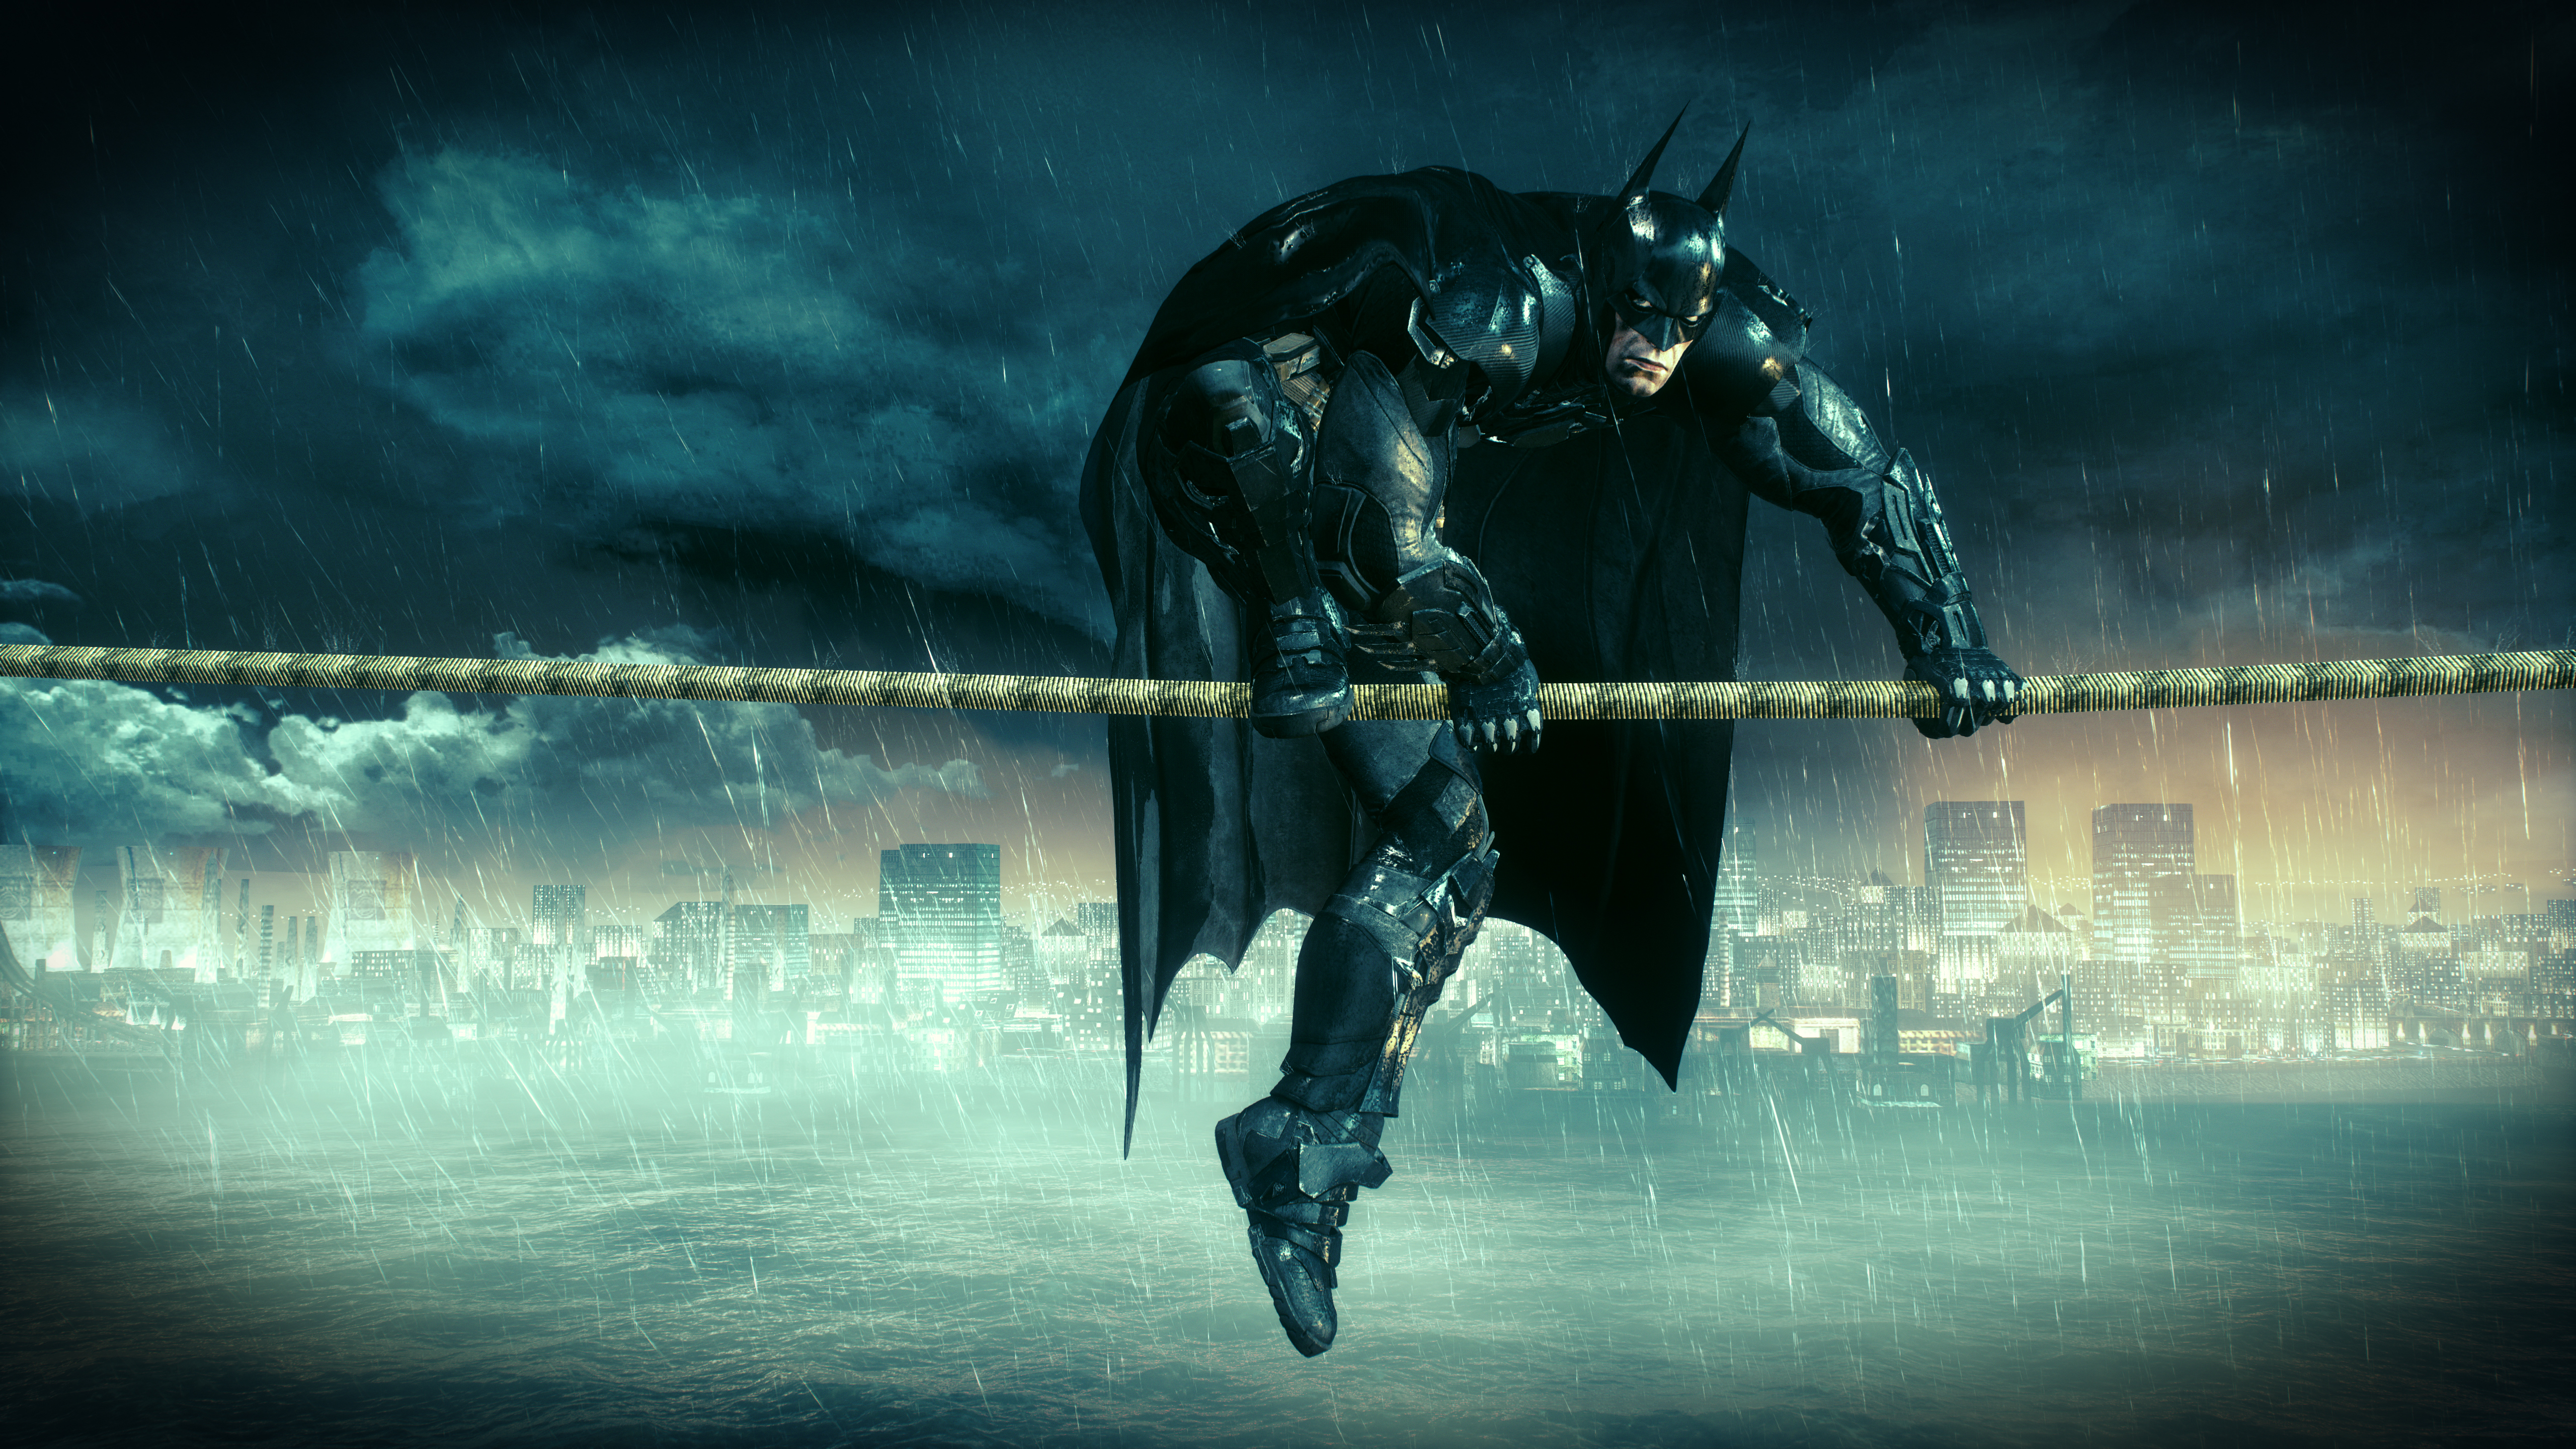 Wallpaper Batman Arkham Knight, Batman, Catwoman, pc Game, Digital  Compositing, Background - Download Free Image